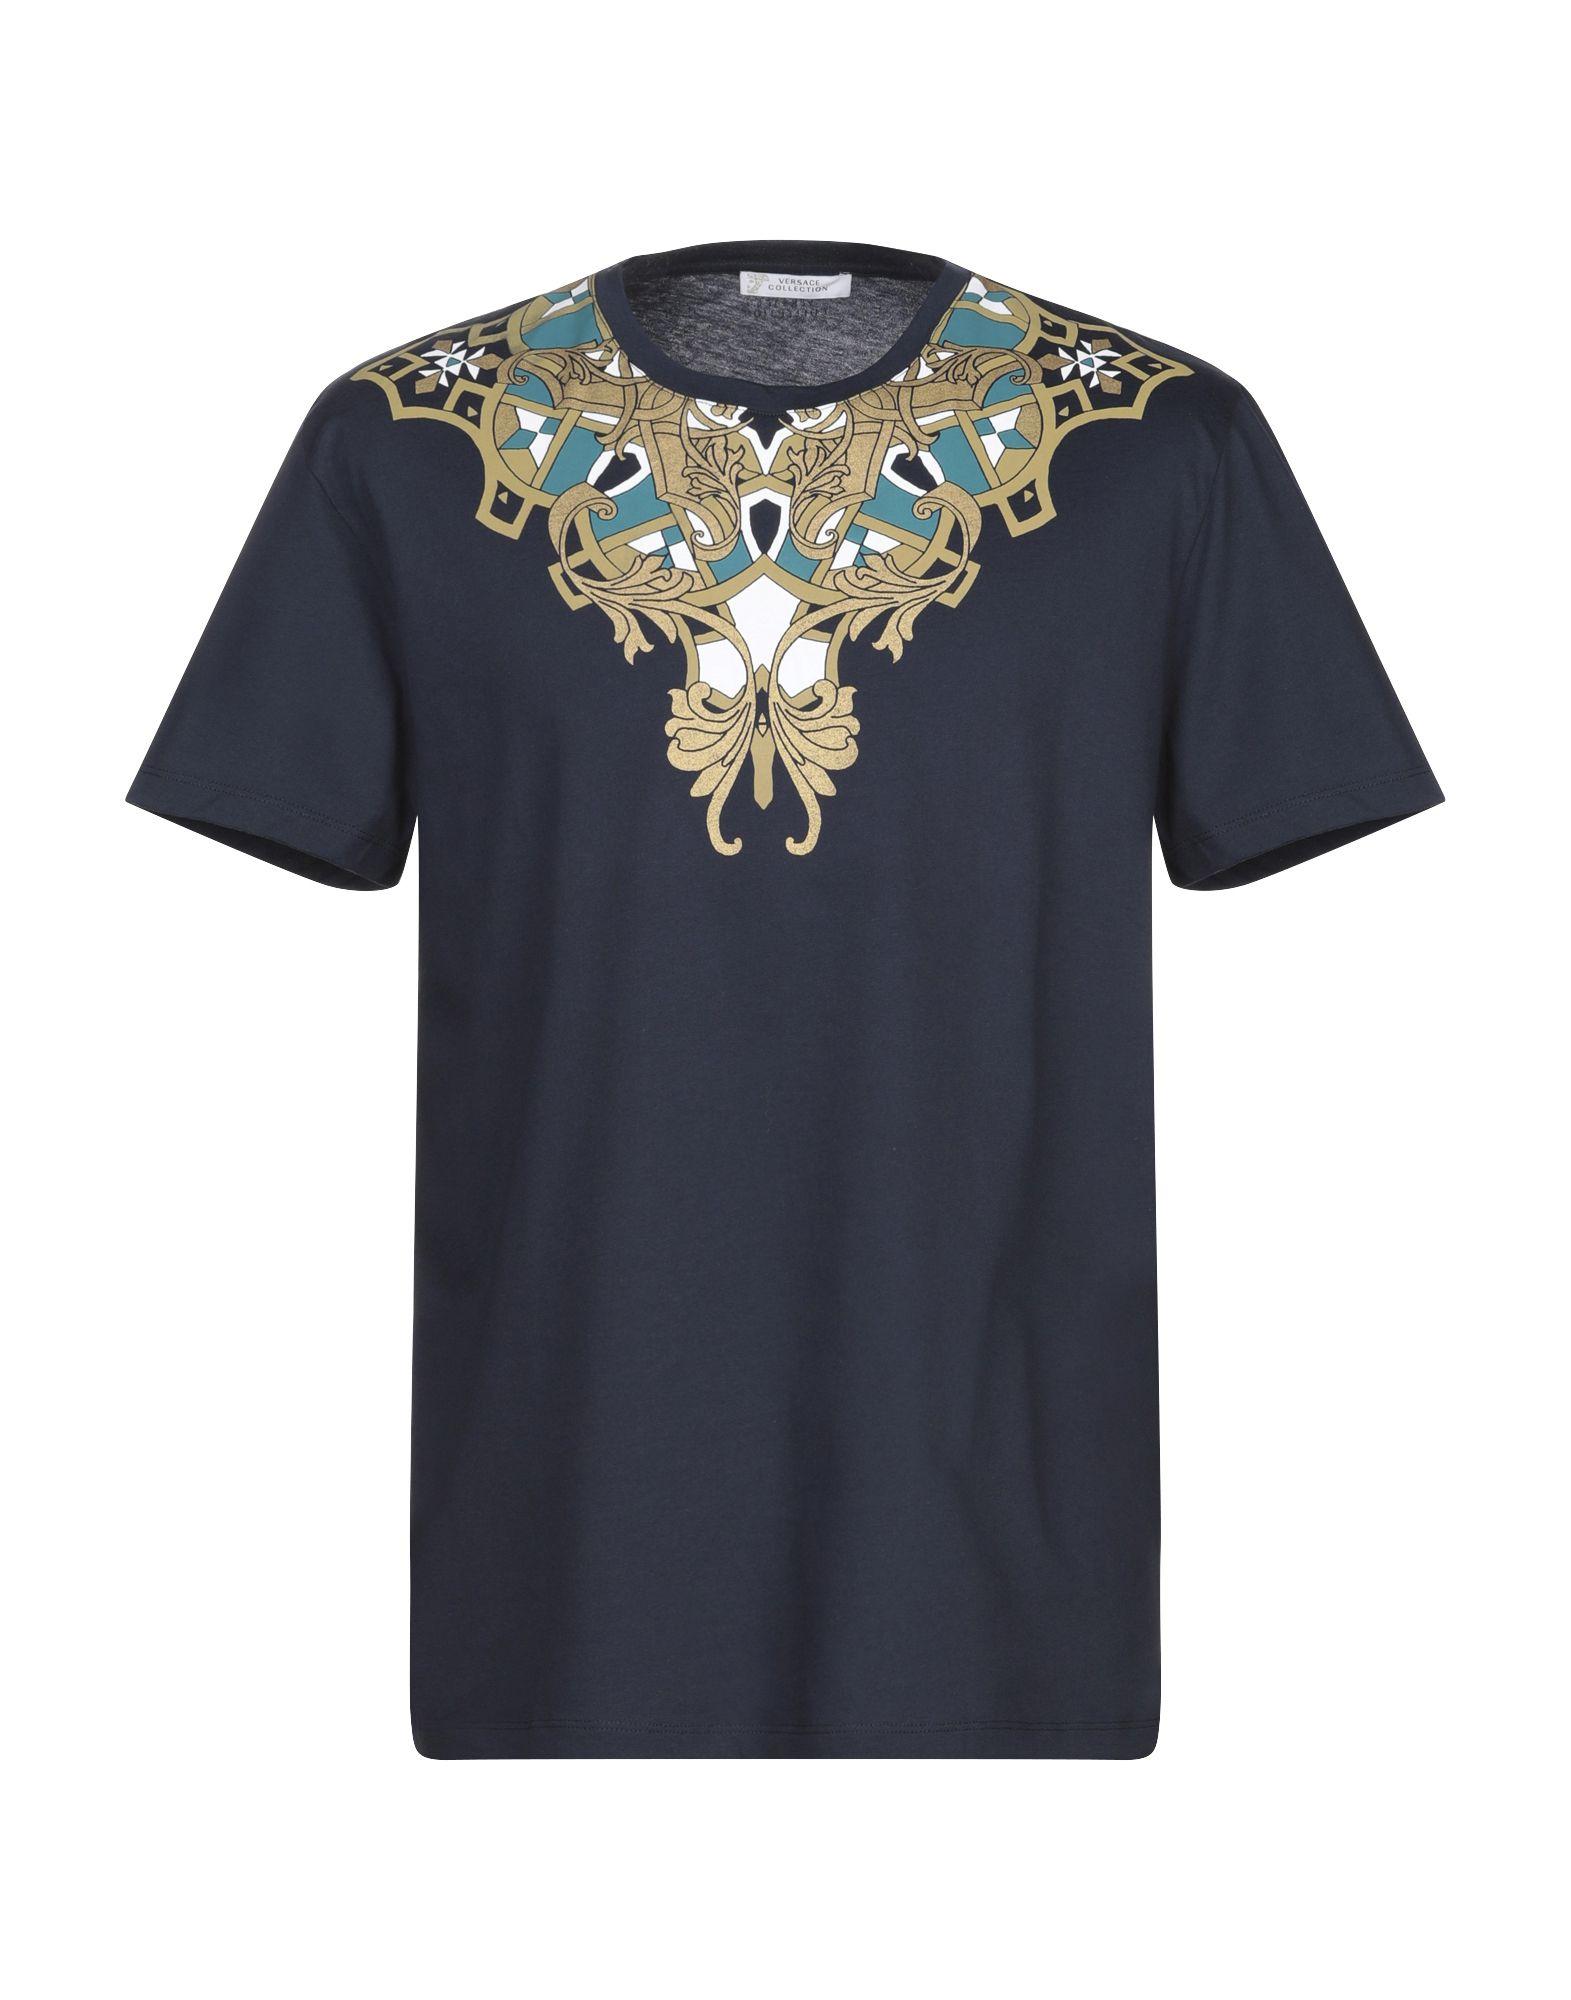 Versace Cotton T-shirt in Dark Blue (Blue) for Men - Lyst